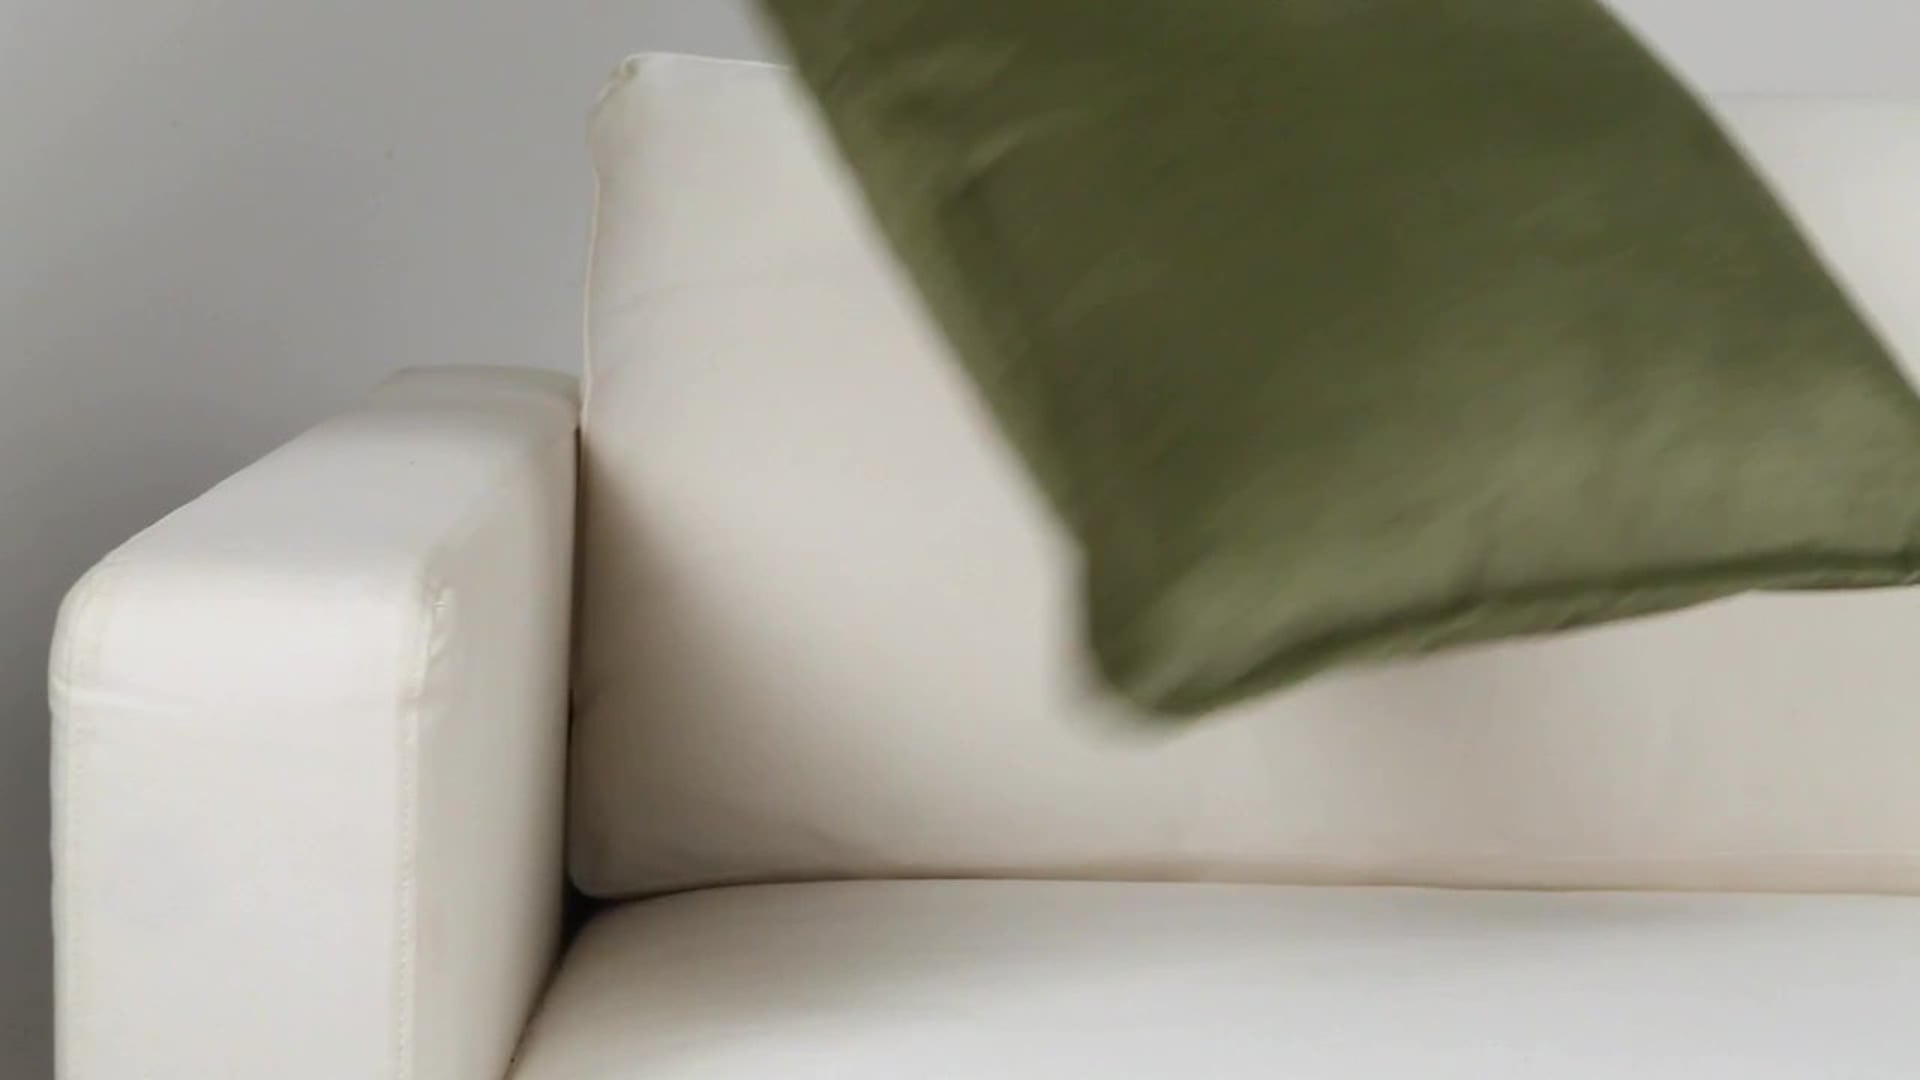 Cotton Velvet Pillow 22x22x5, Down Fill